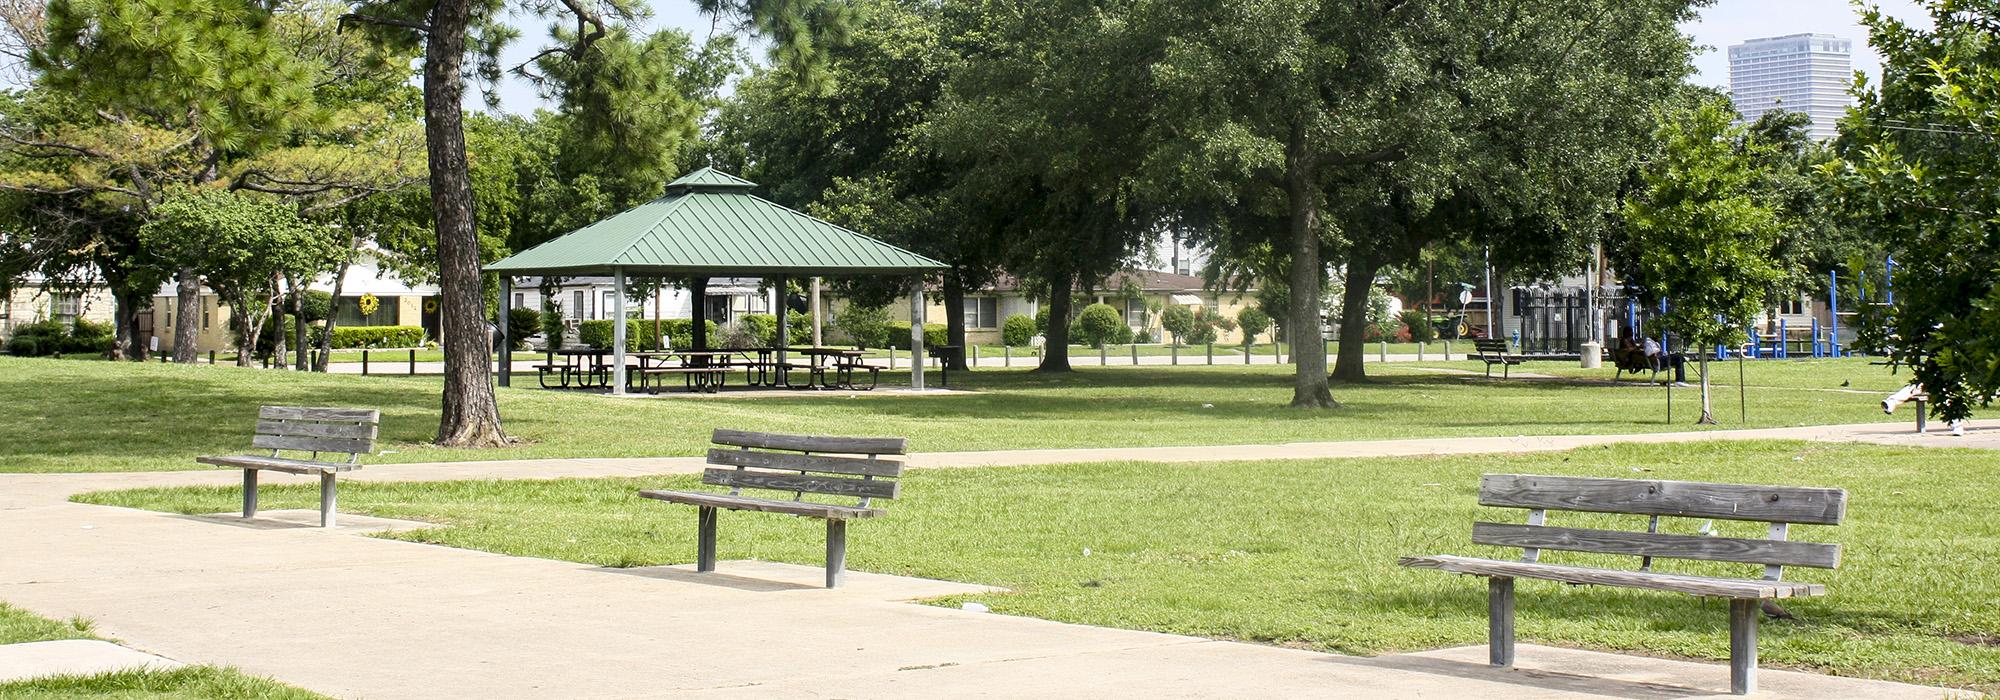 Emancipation Park, Houston TX